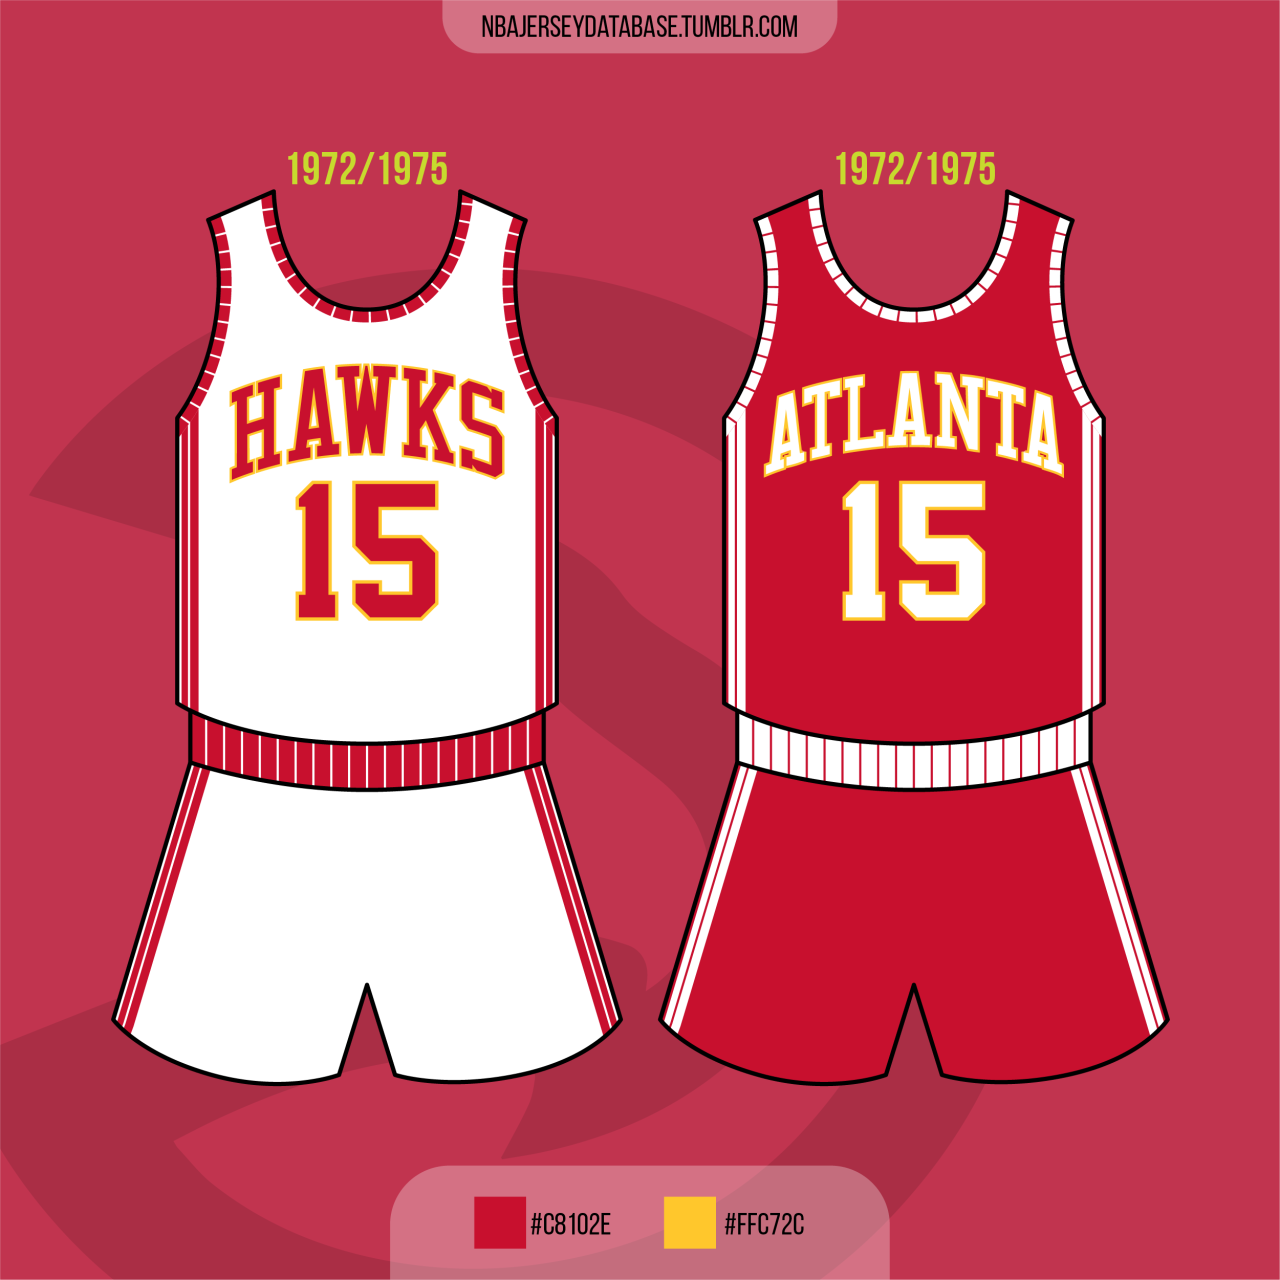 hawks uniforms